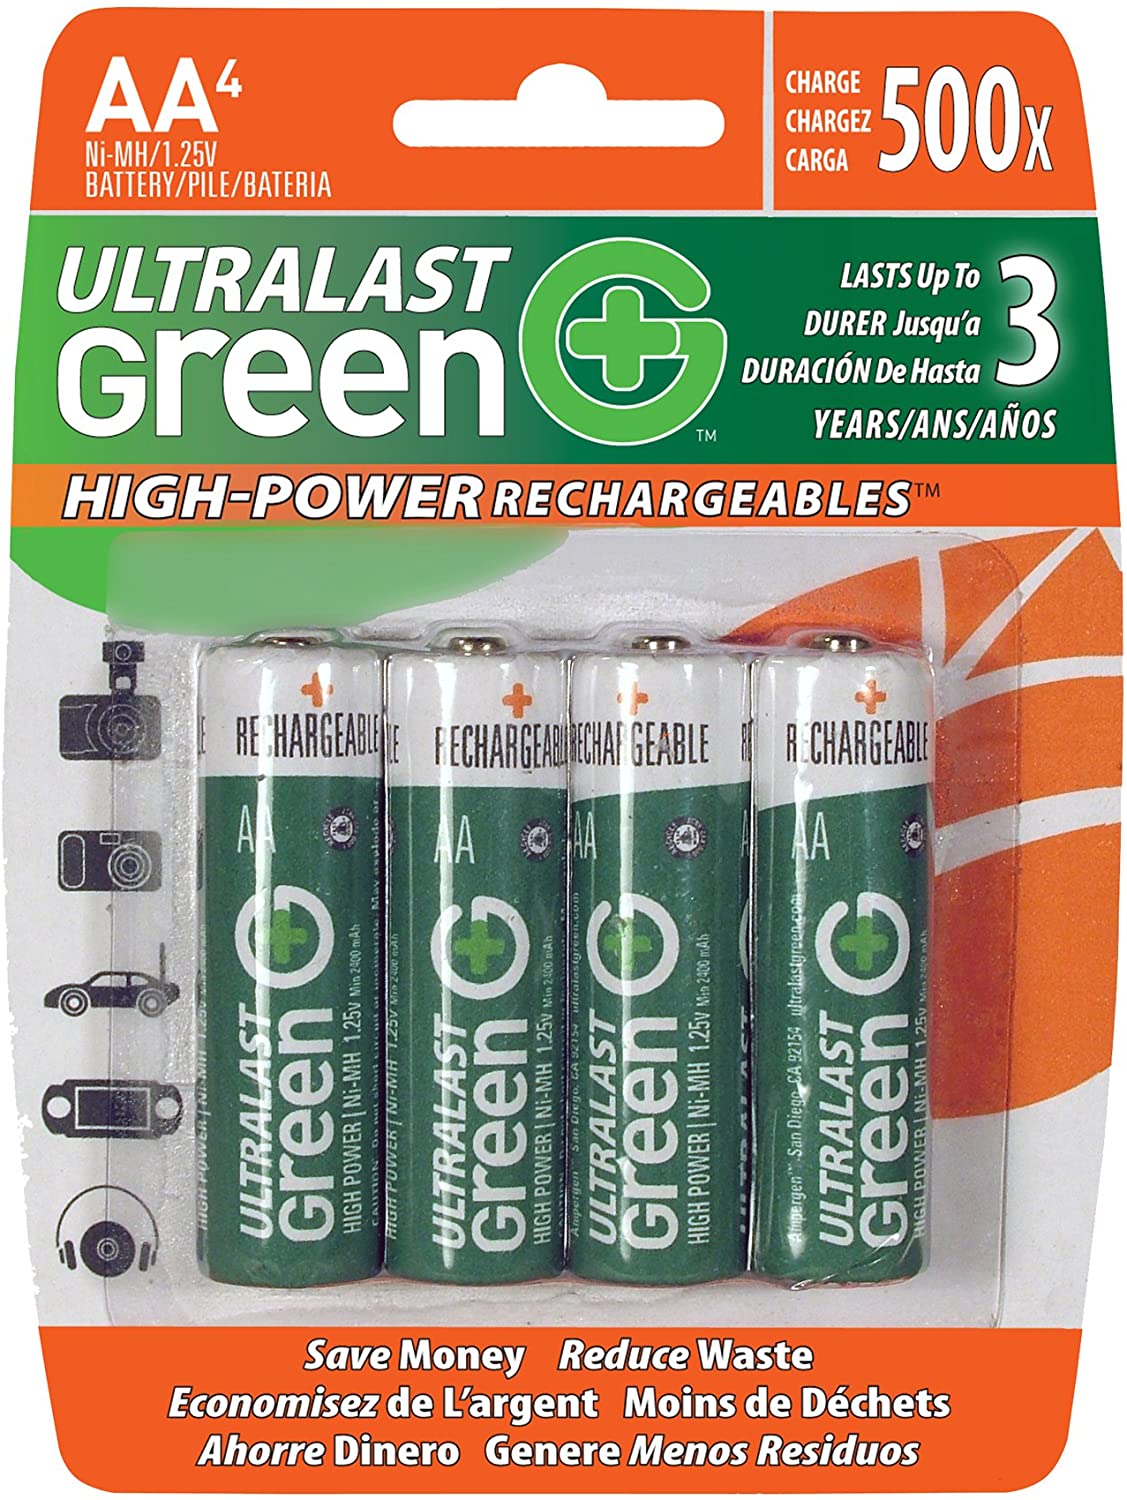 Ultralast Green High-Power Rechargeable AA Batteries (4 pack)